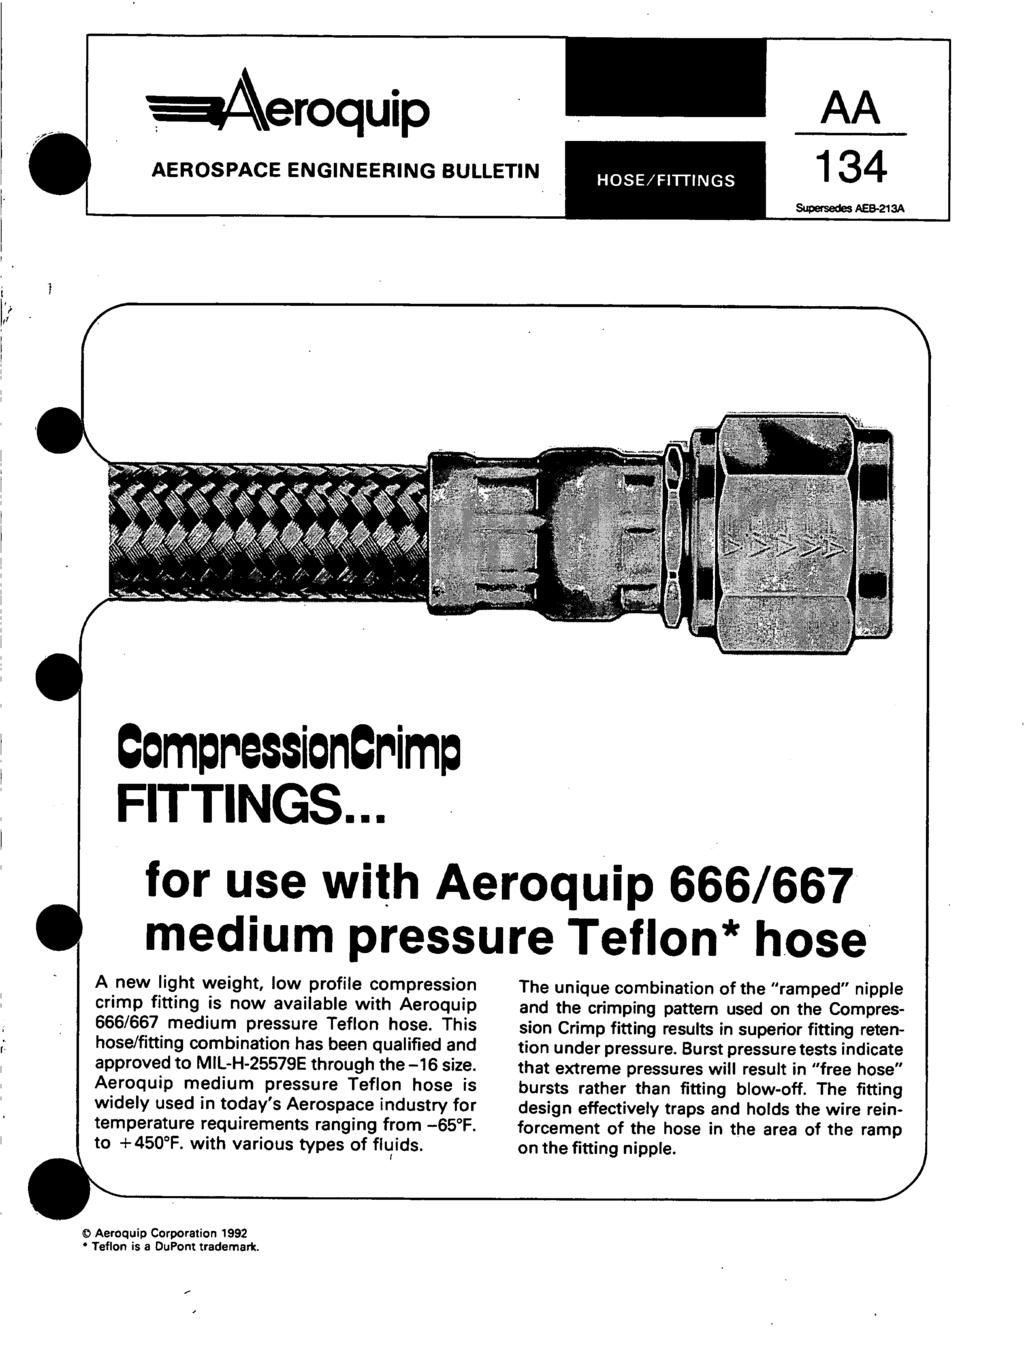 3Xeroquip AA AEROSPACE ENGINEERING BULLETIN 134 SuesdsAEB-213A CompressionCrimp FITTINGS.